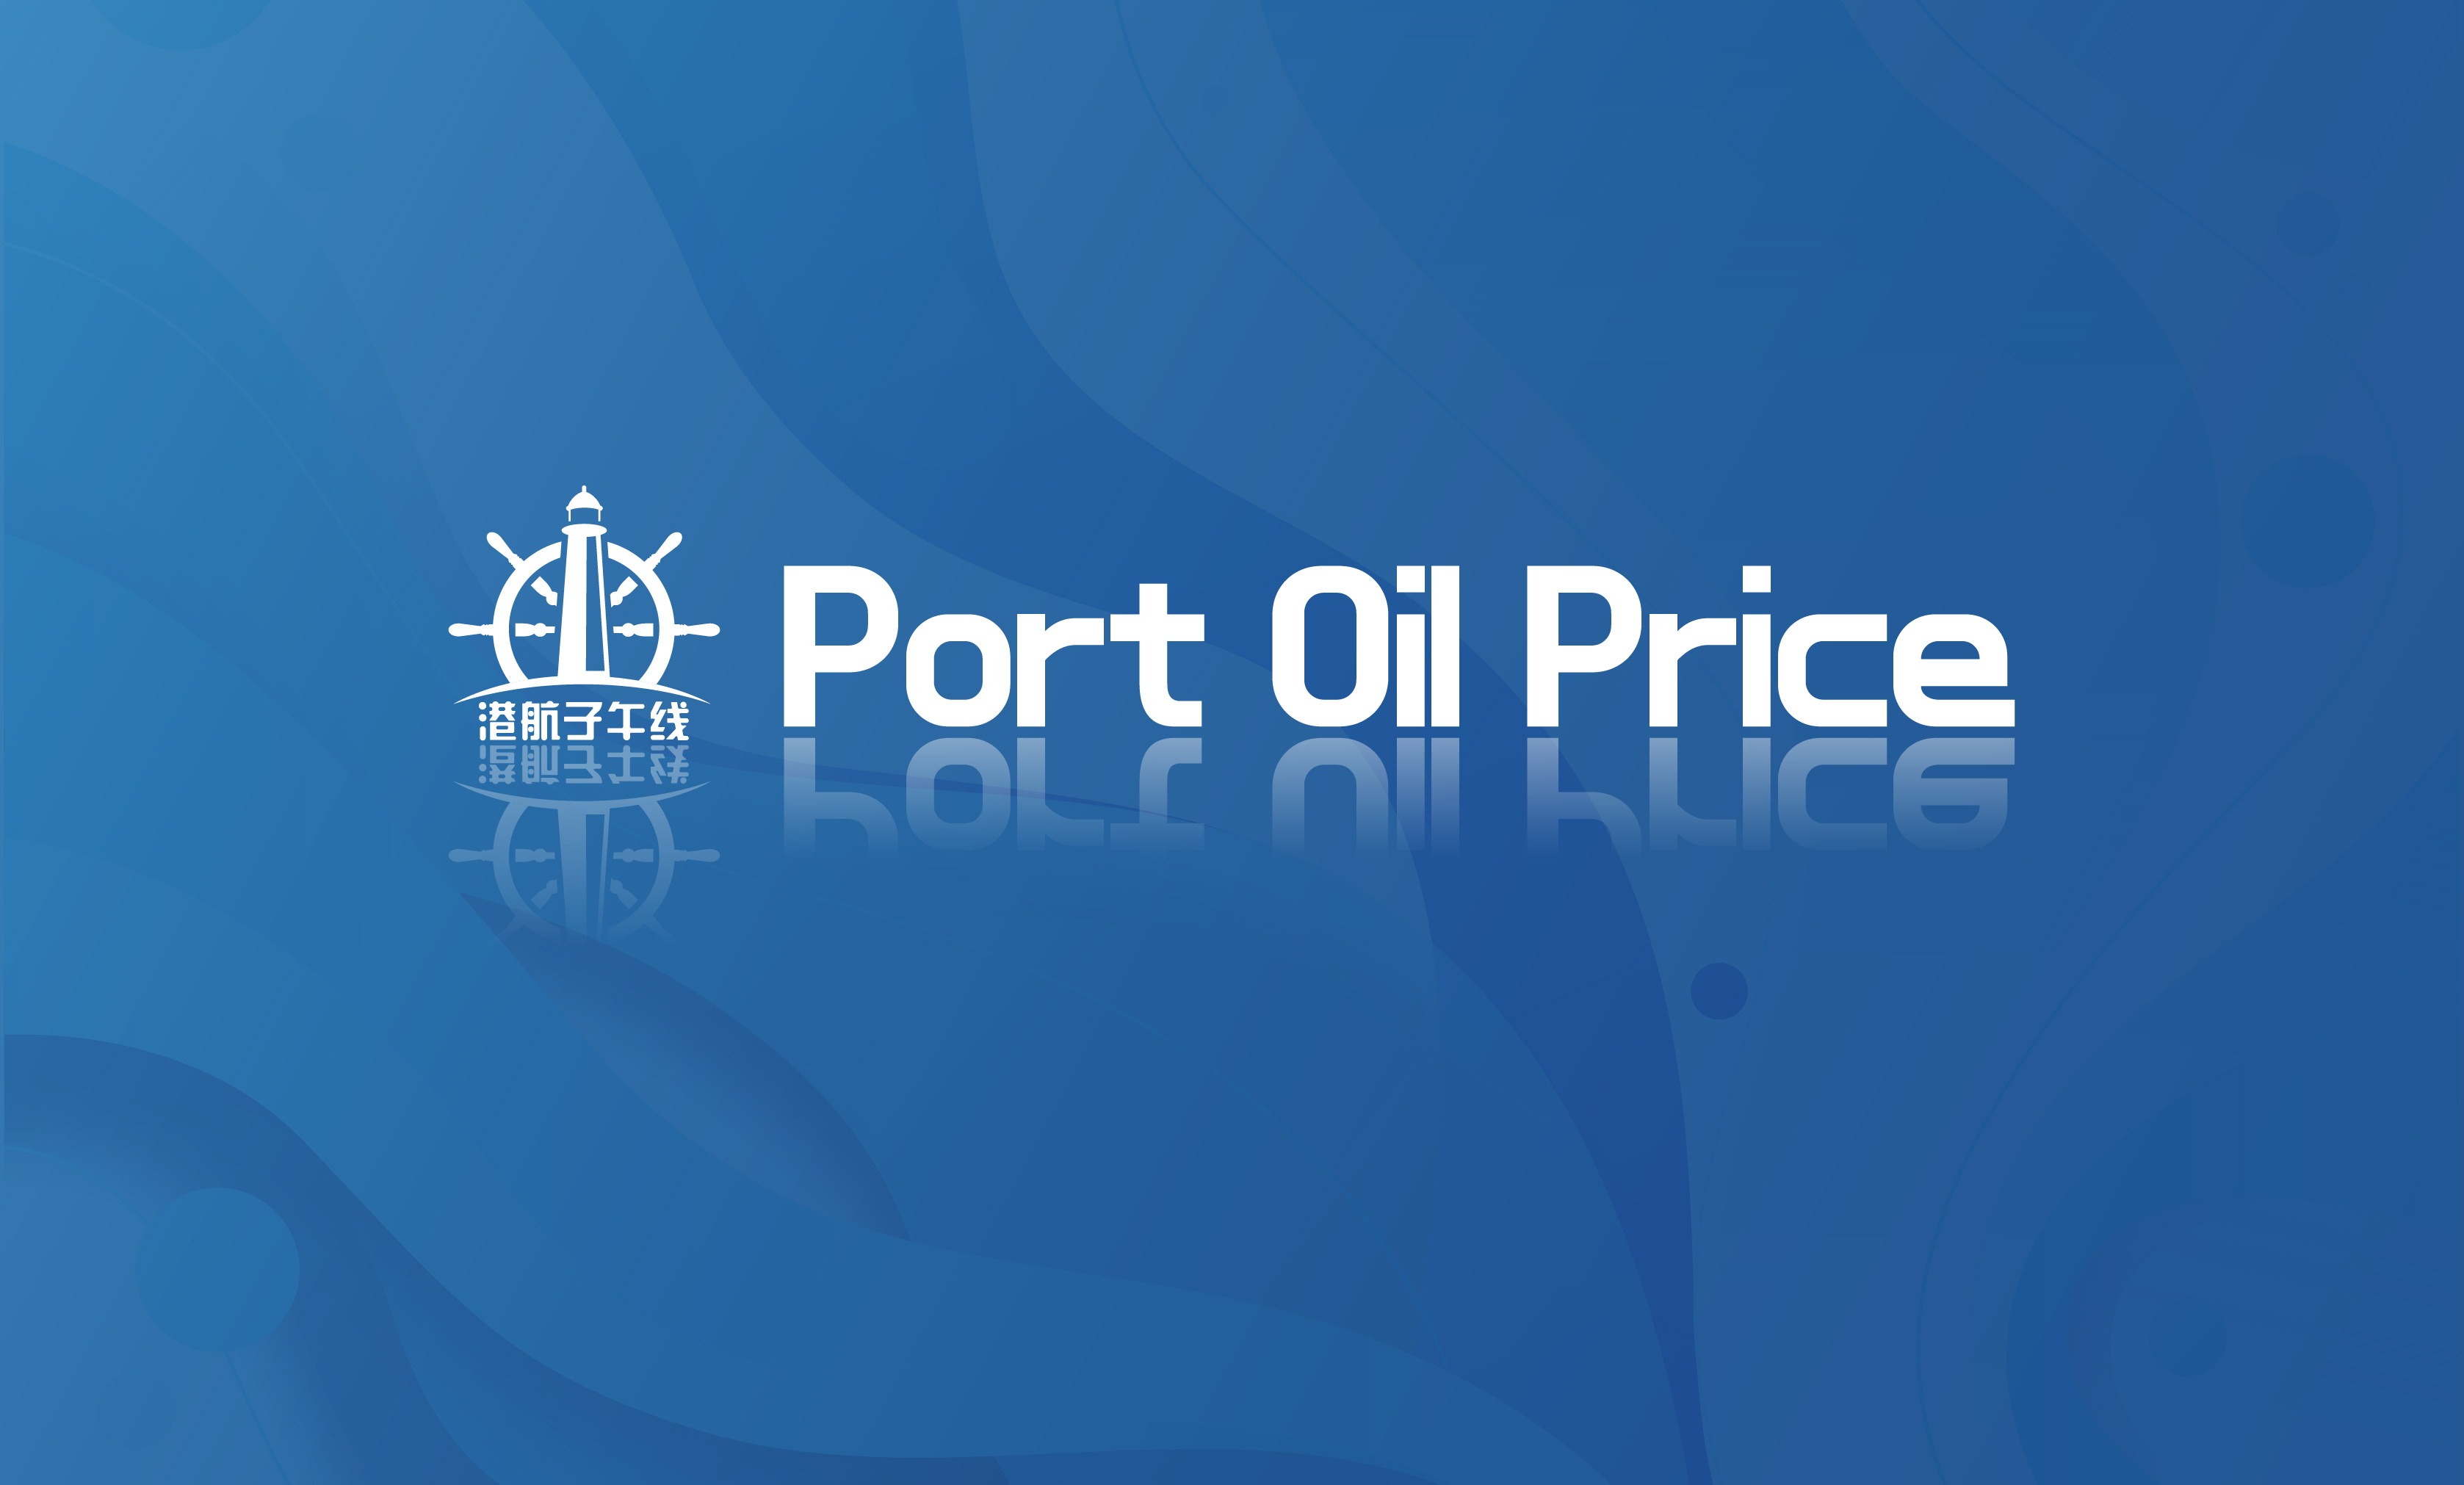 4/8 Oil Price for Global Popular Ports